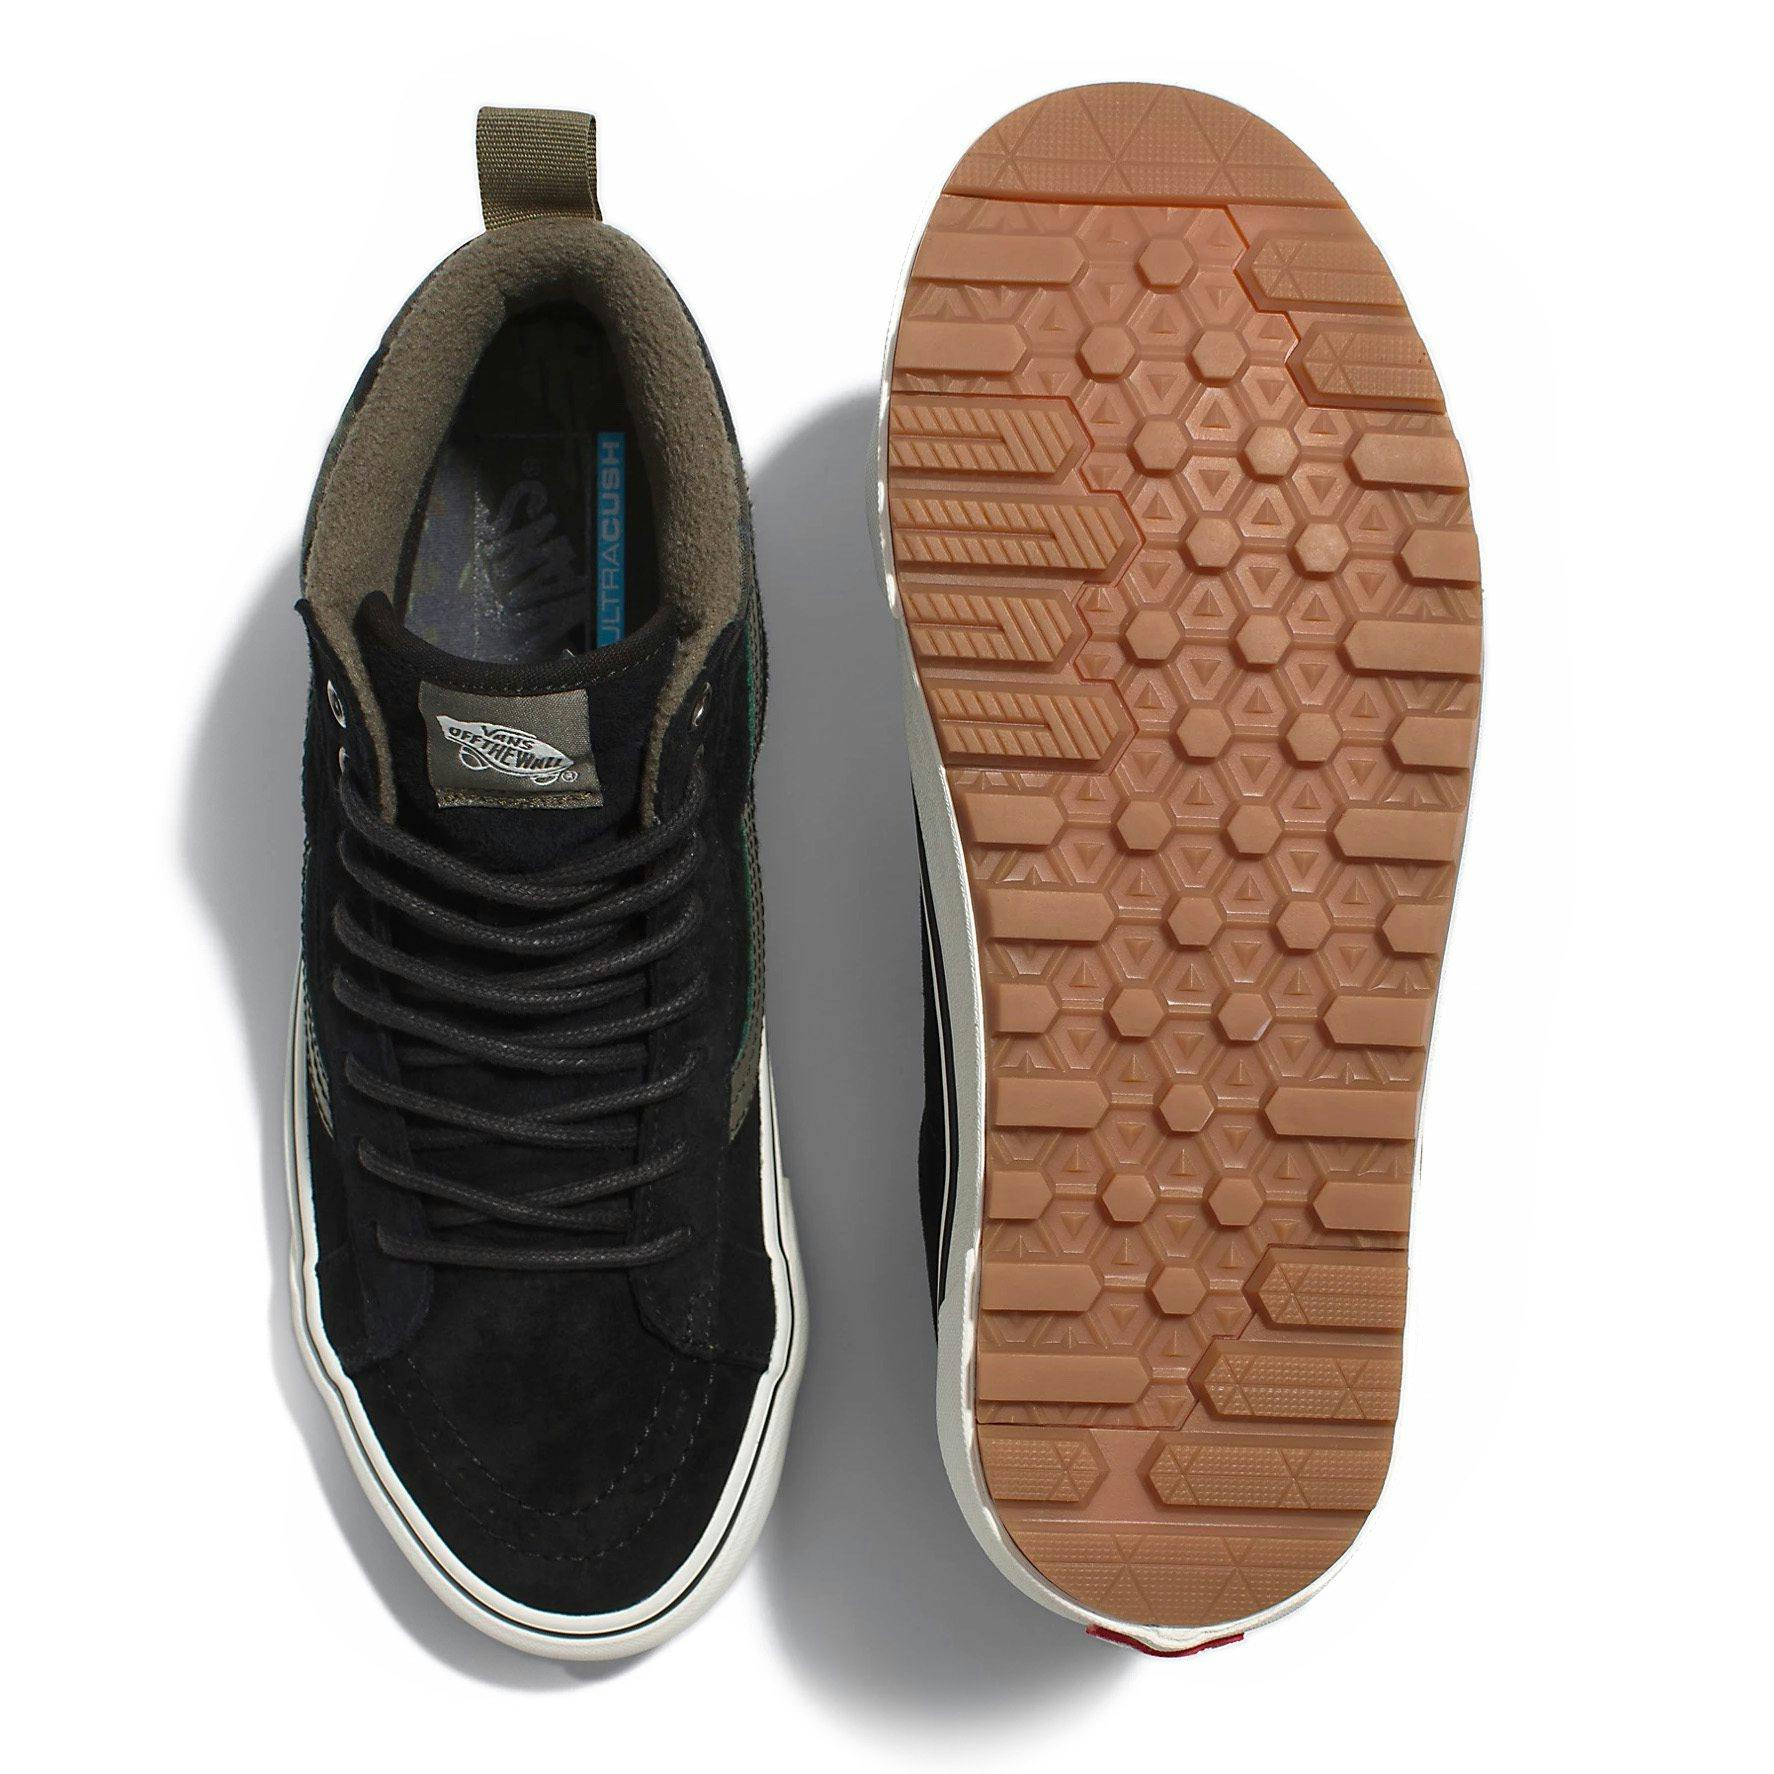 Vans SK8-Hi MTE-1 Sneaker Boot Huckberry Black/Marshmellow - Trail | | Sneakers